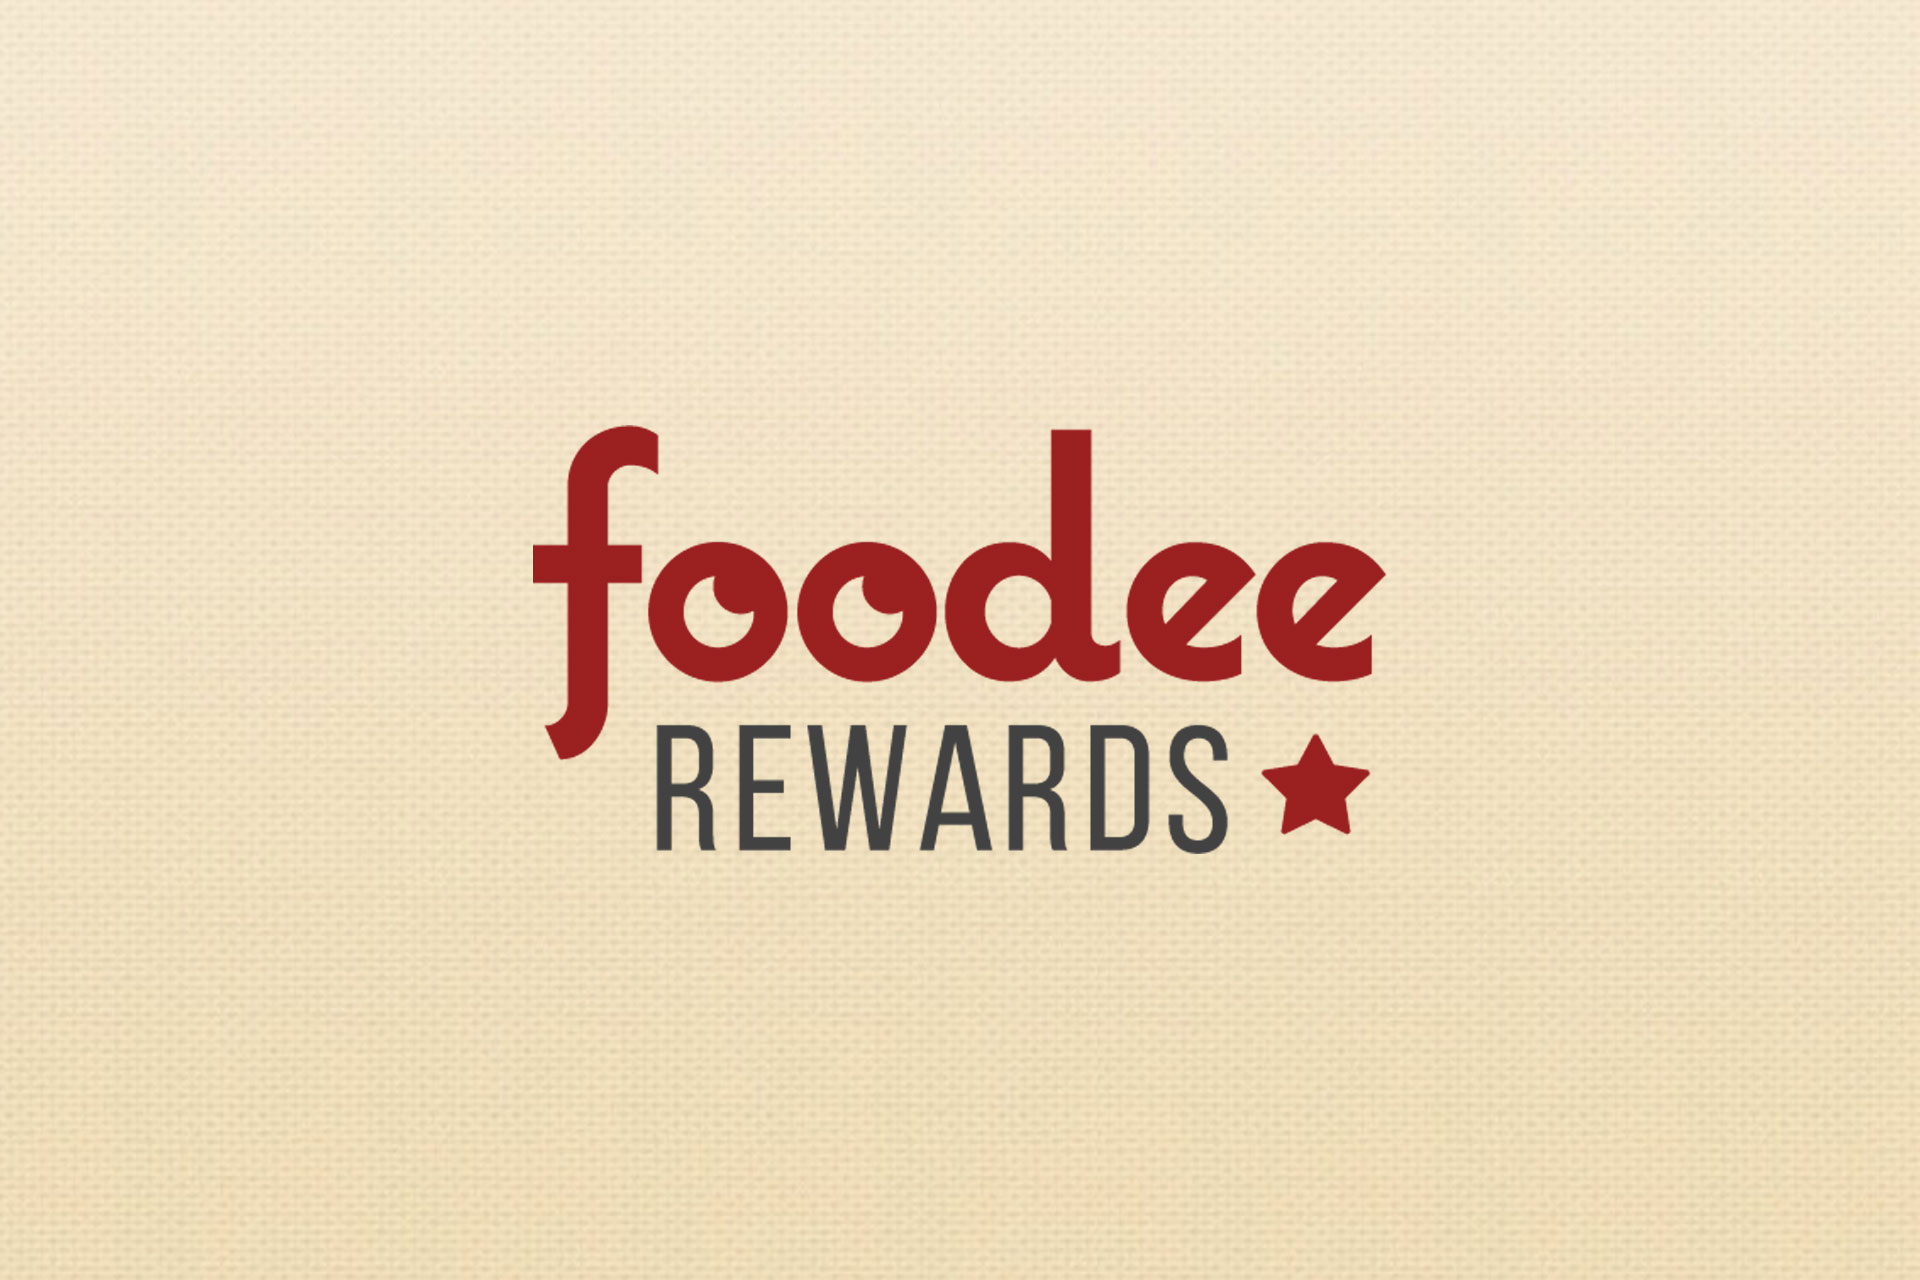 Foodee rewards logo